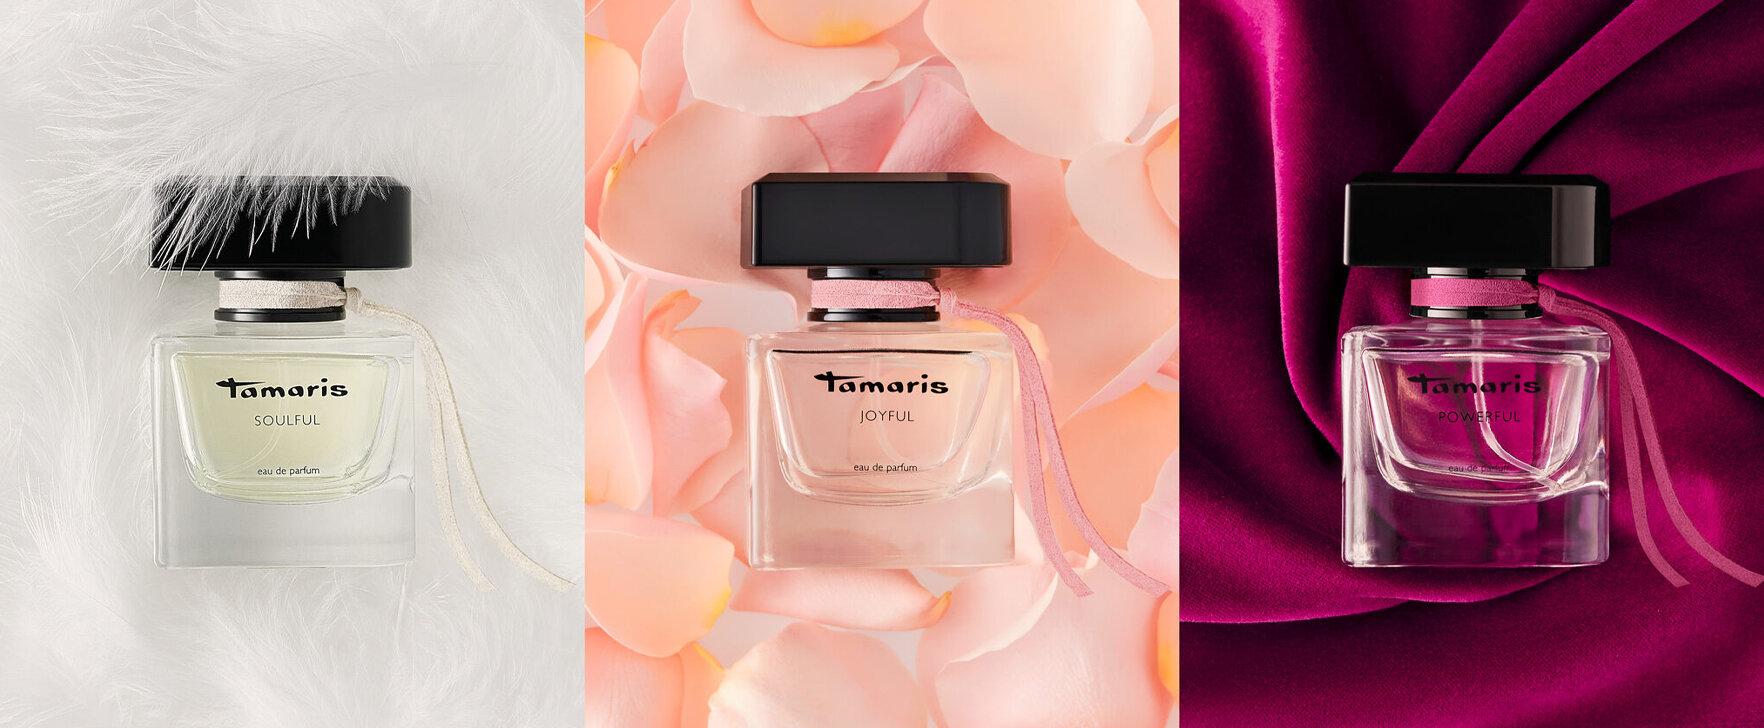 Tamaris' Perfume Debut: The New Women's Fragrances "Powerful", "Joyful",and "Soulful".